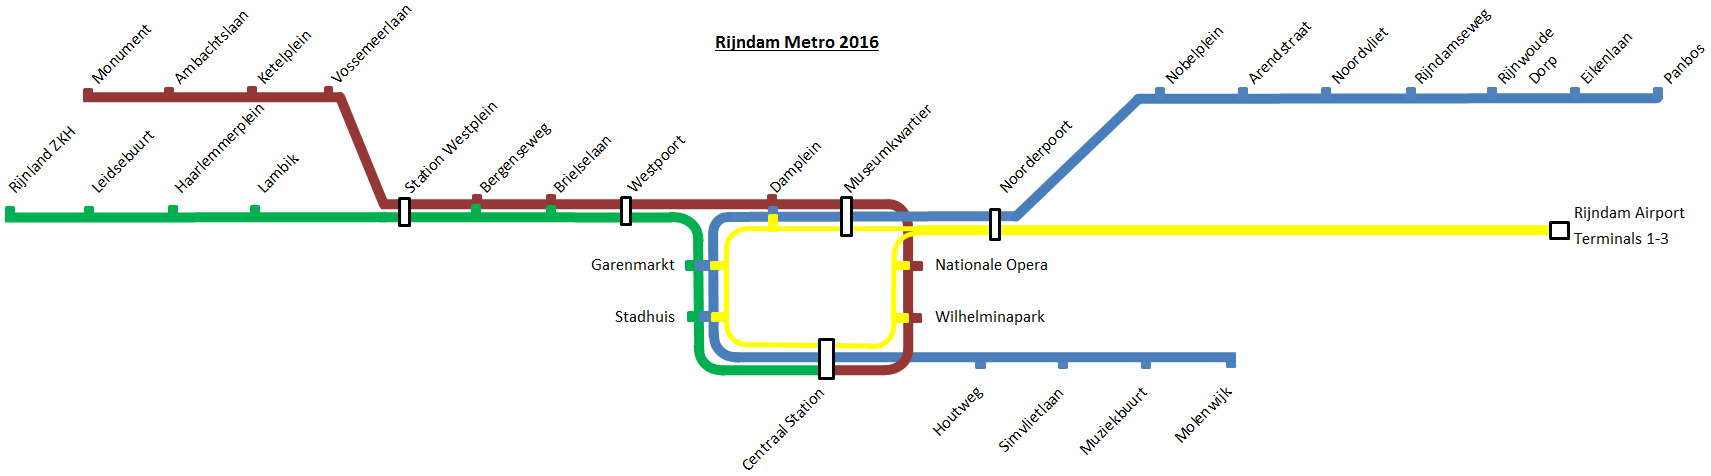 Rijndam_Metro wandkaart 2016.png